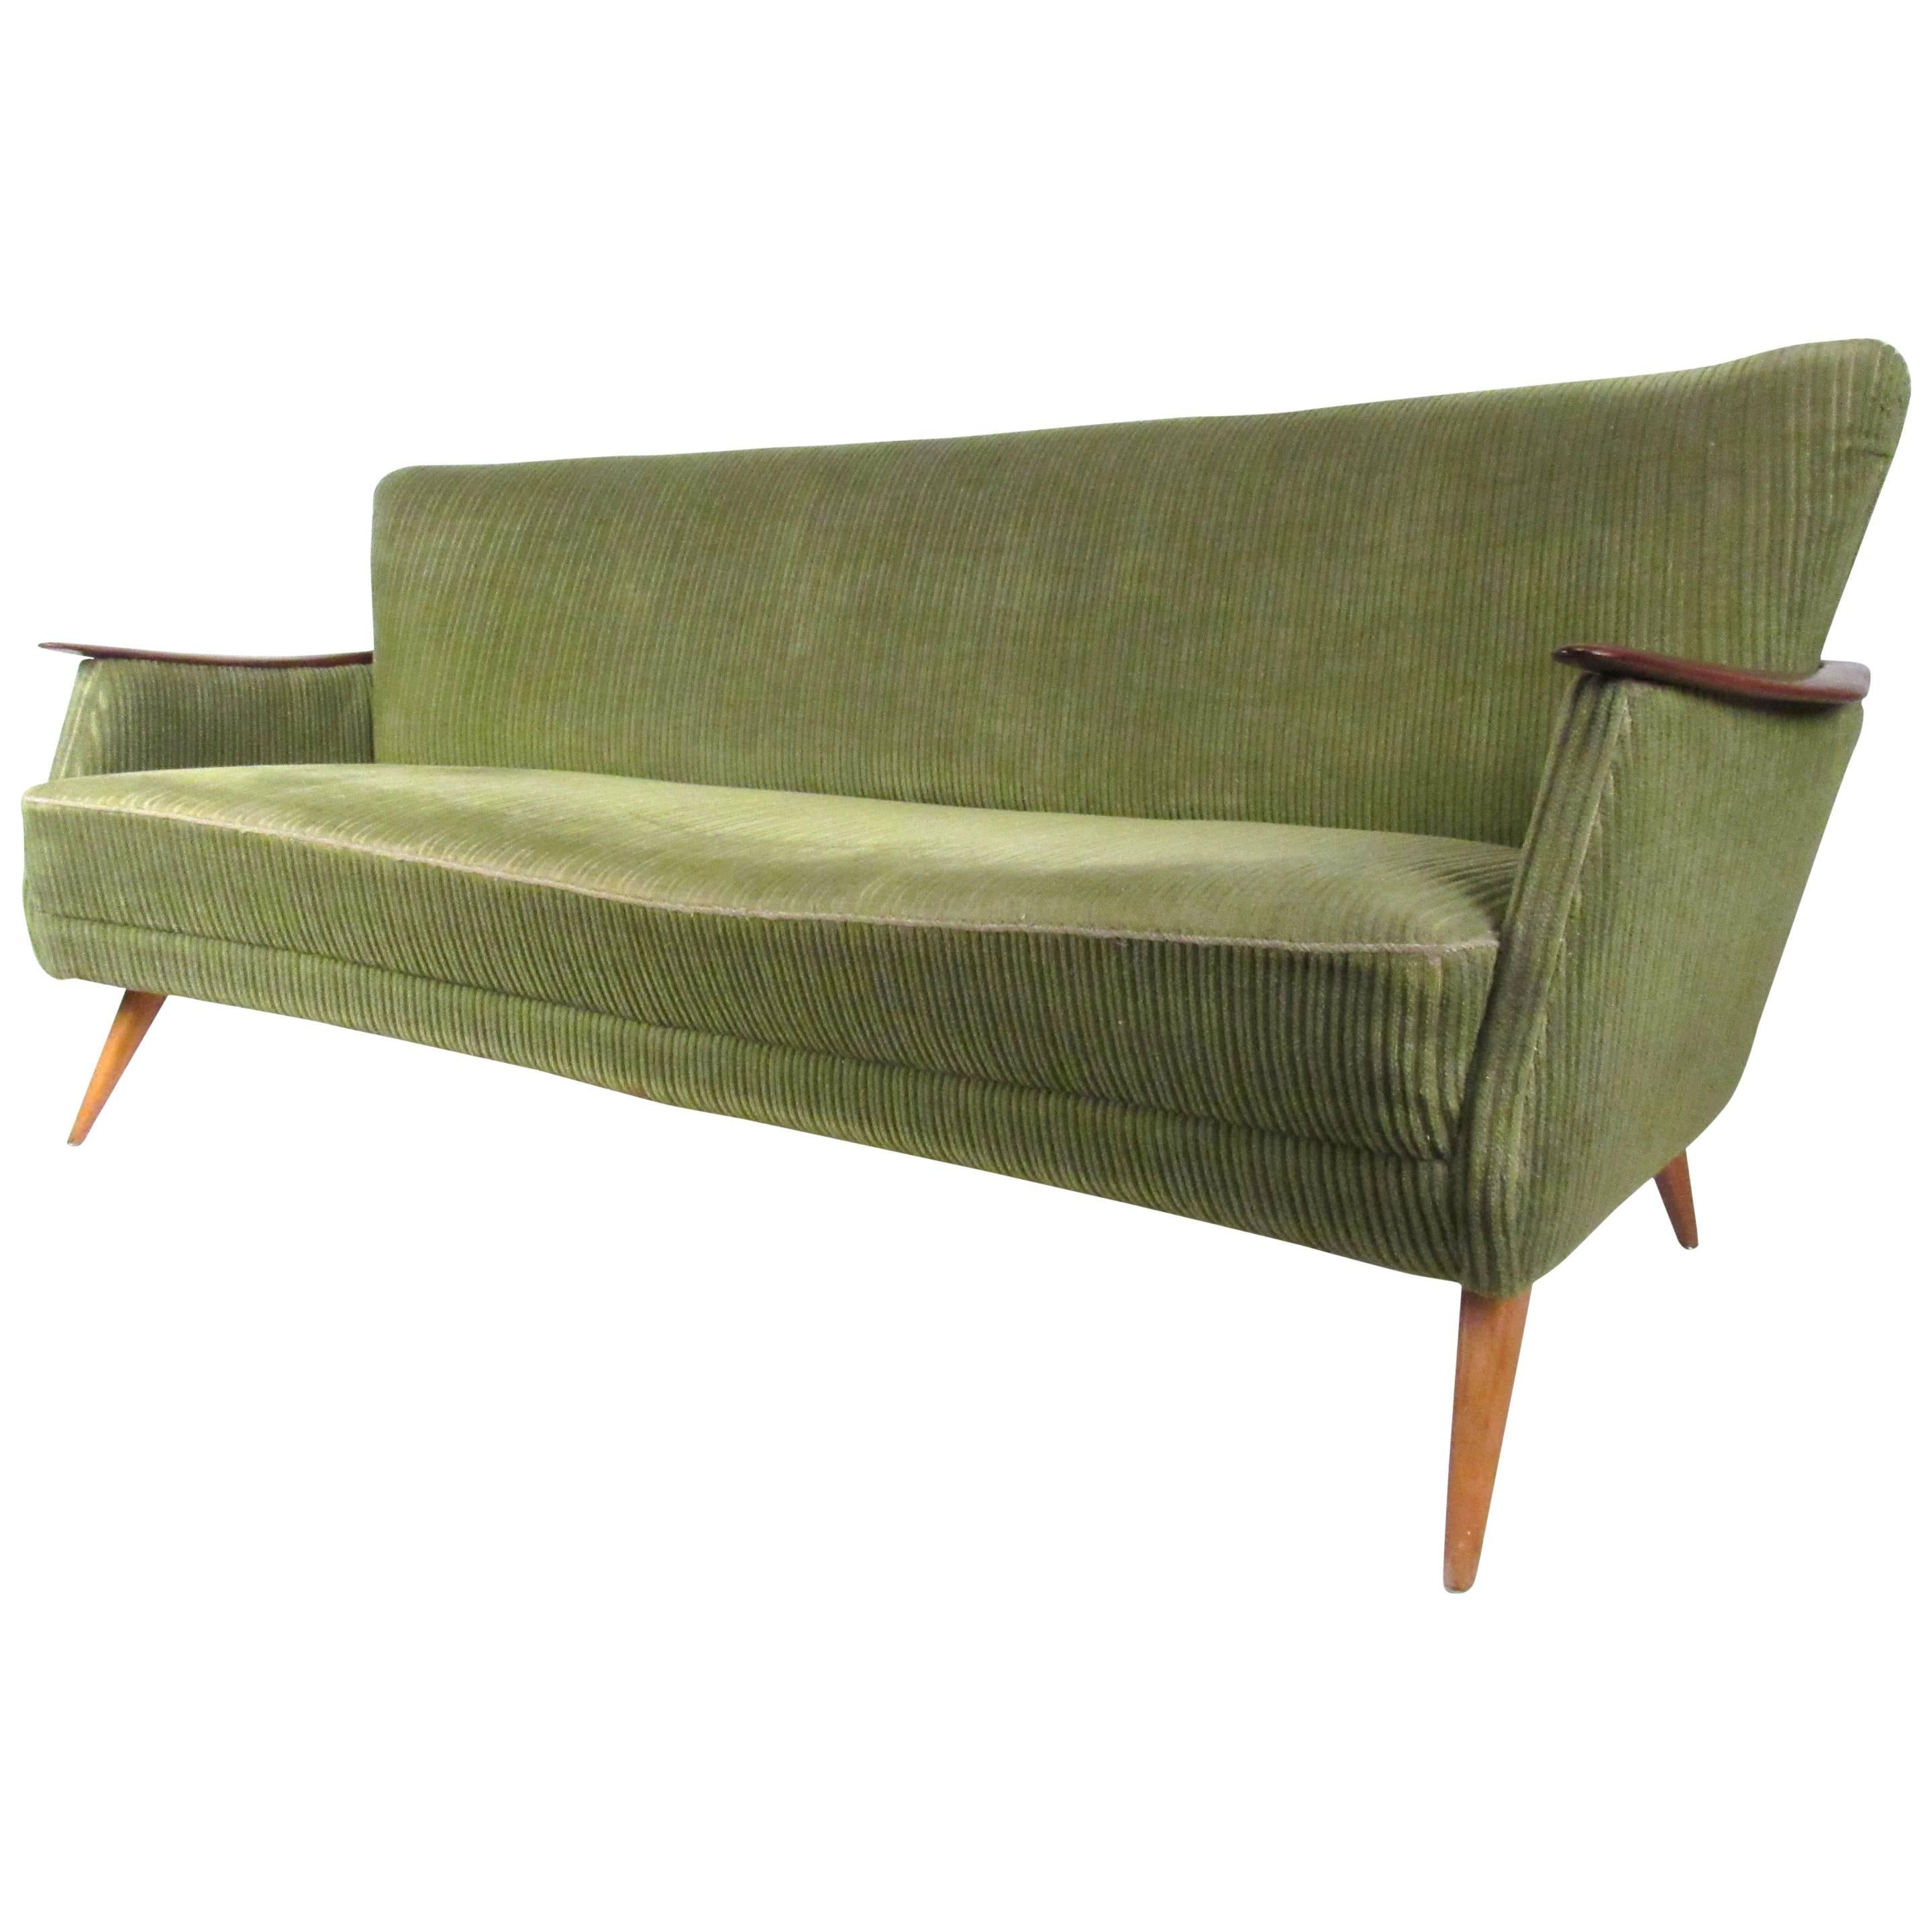 Scandinavian Modern Sofa With Wood Arms